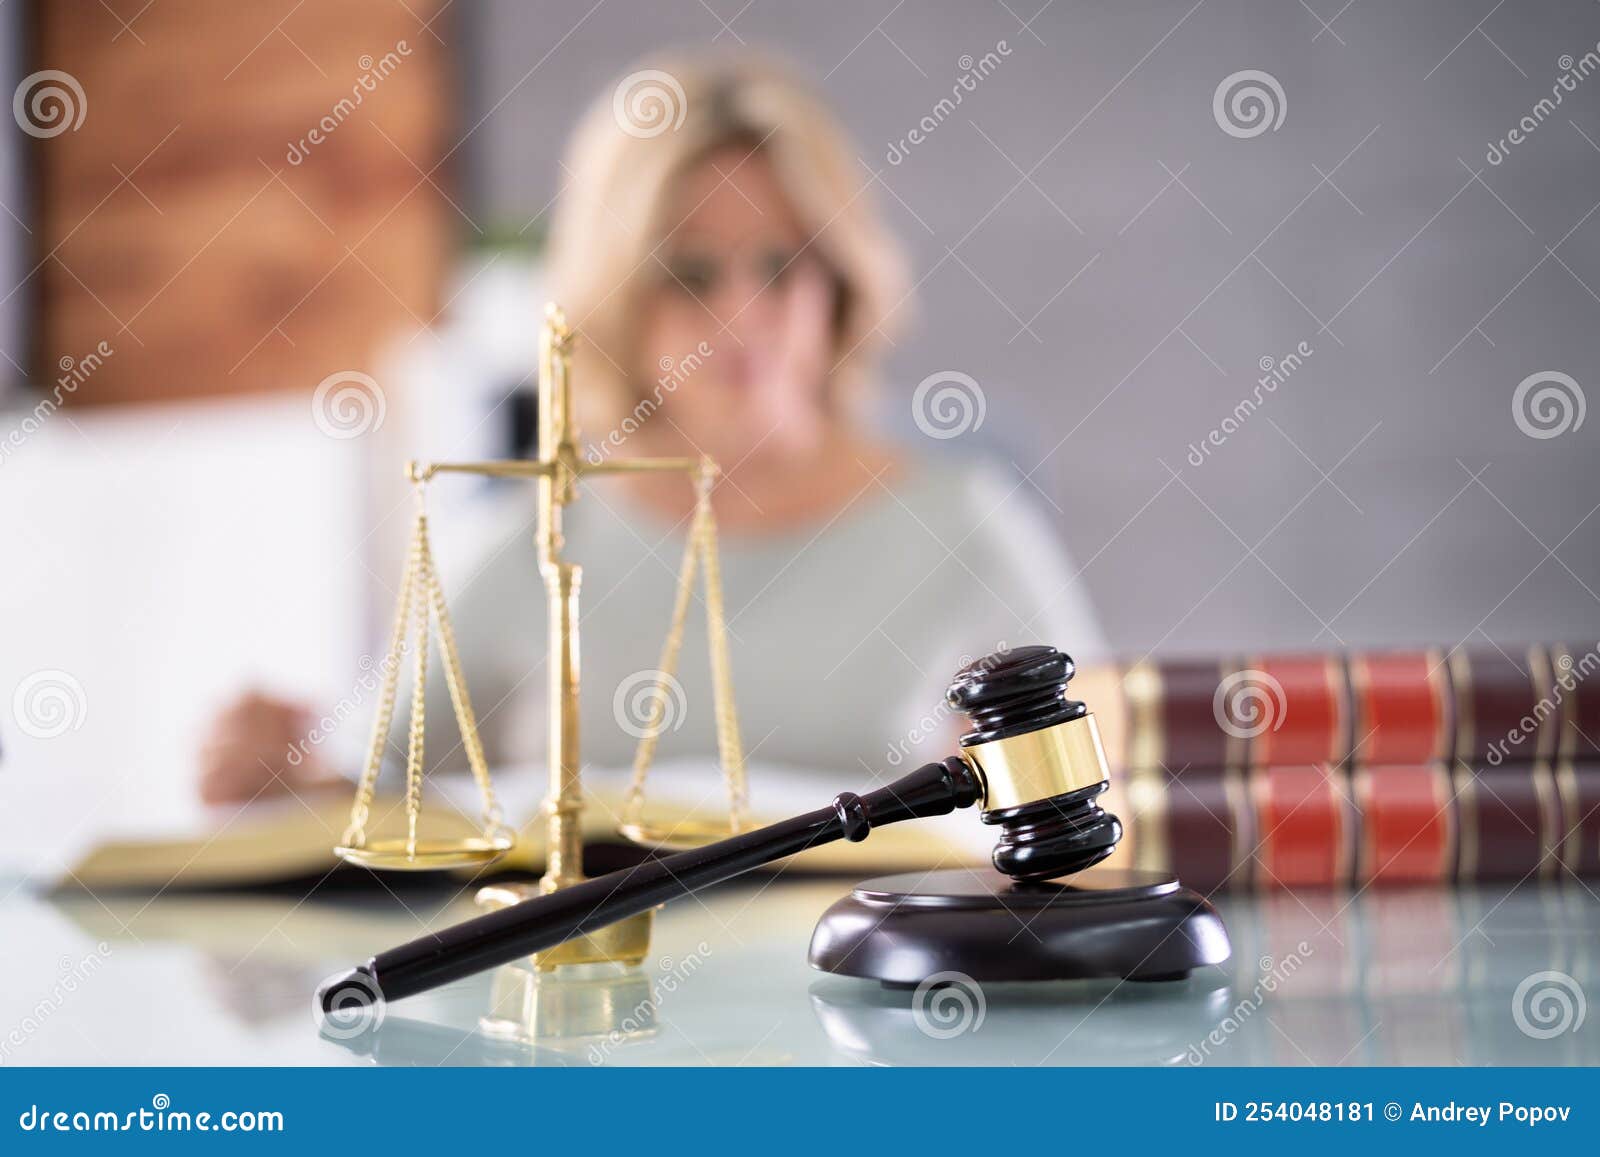 jurist lawyer criminal litigation and arbitration